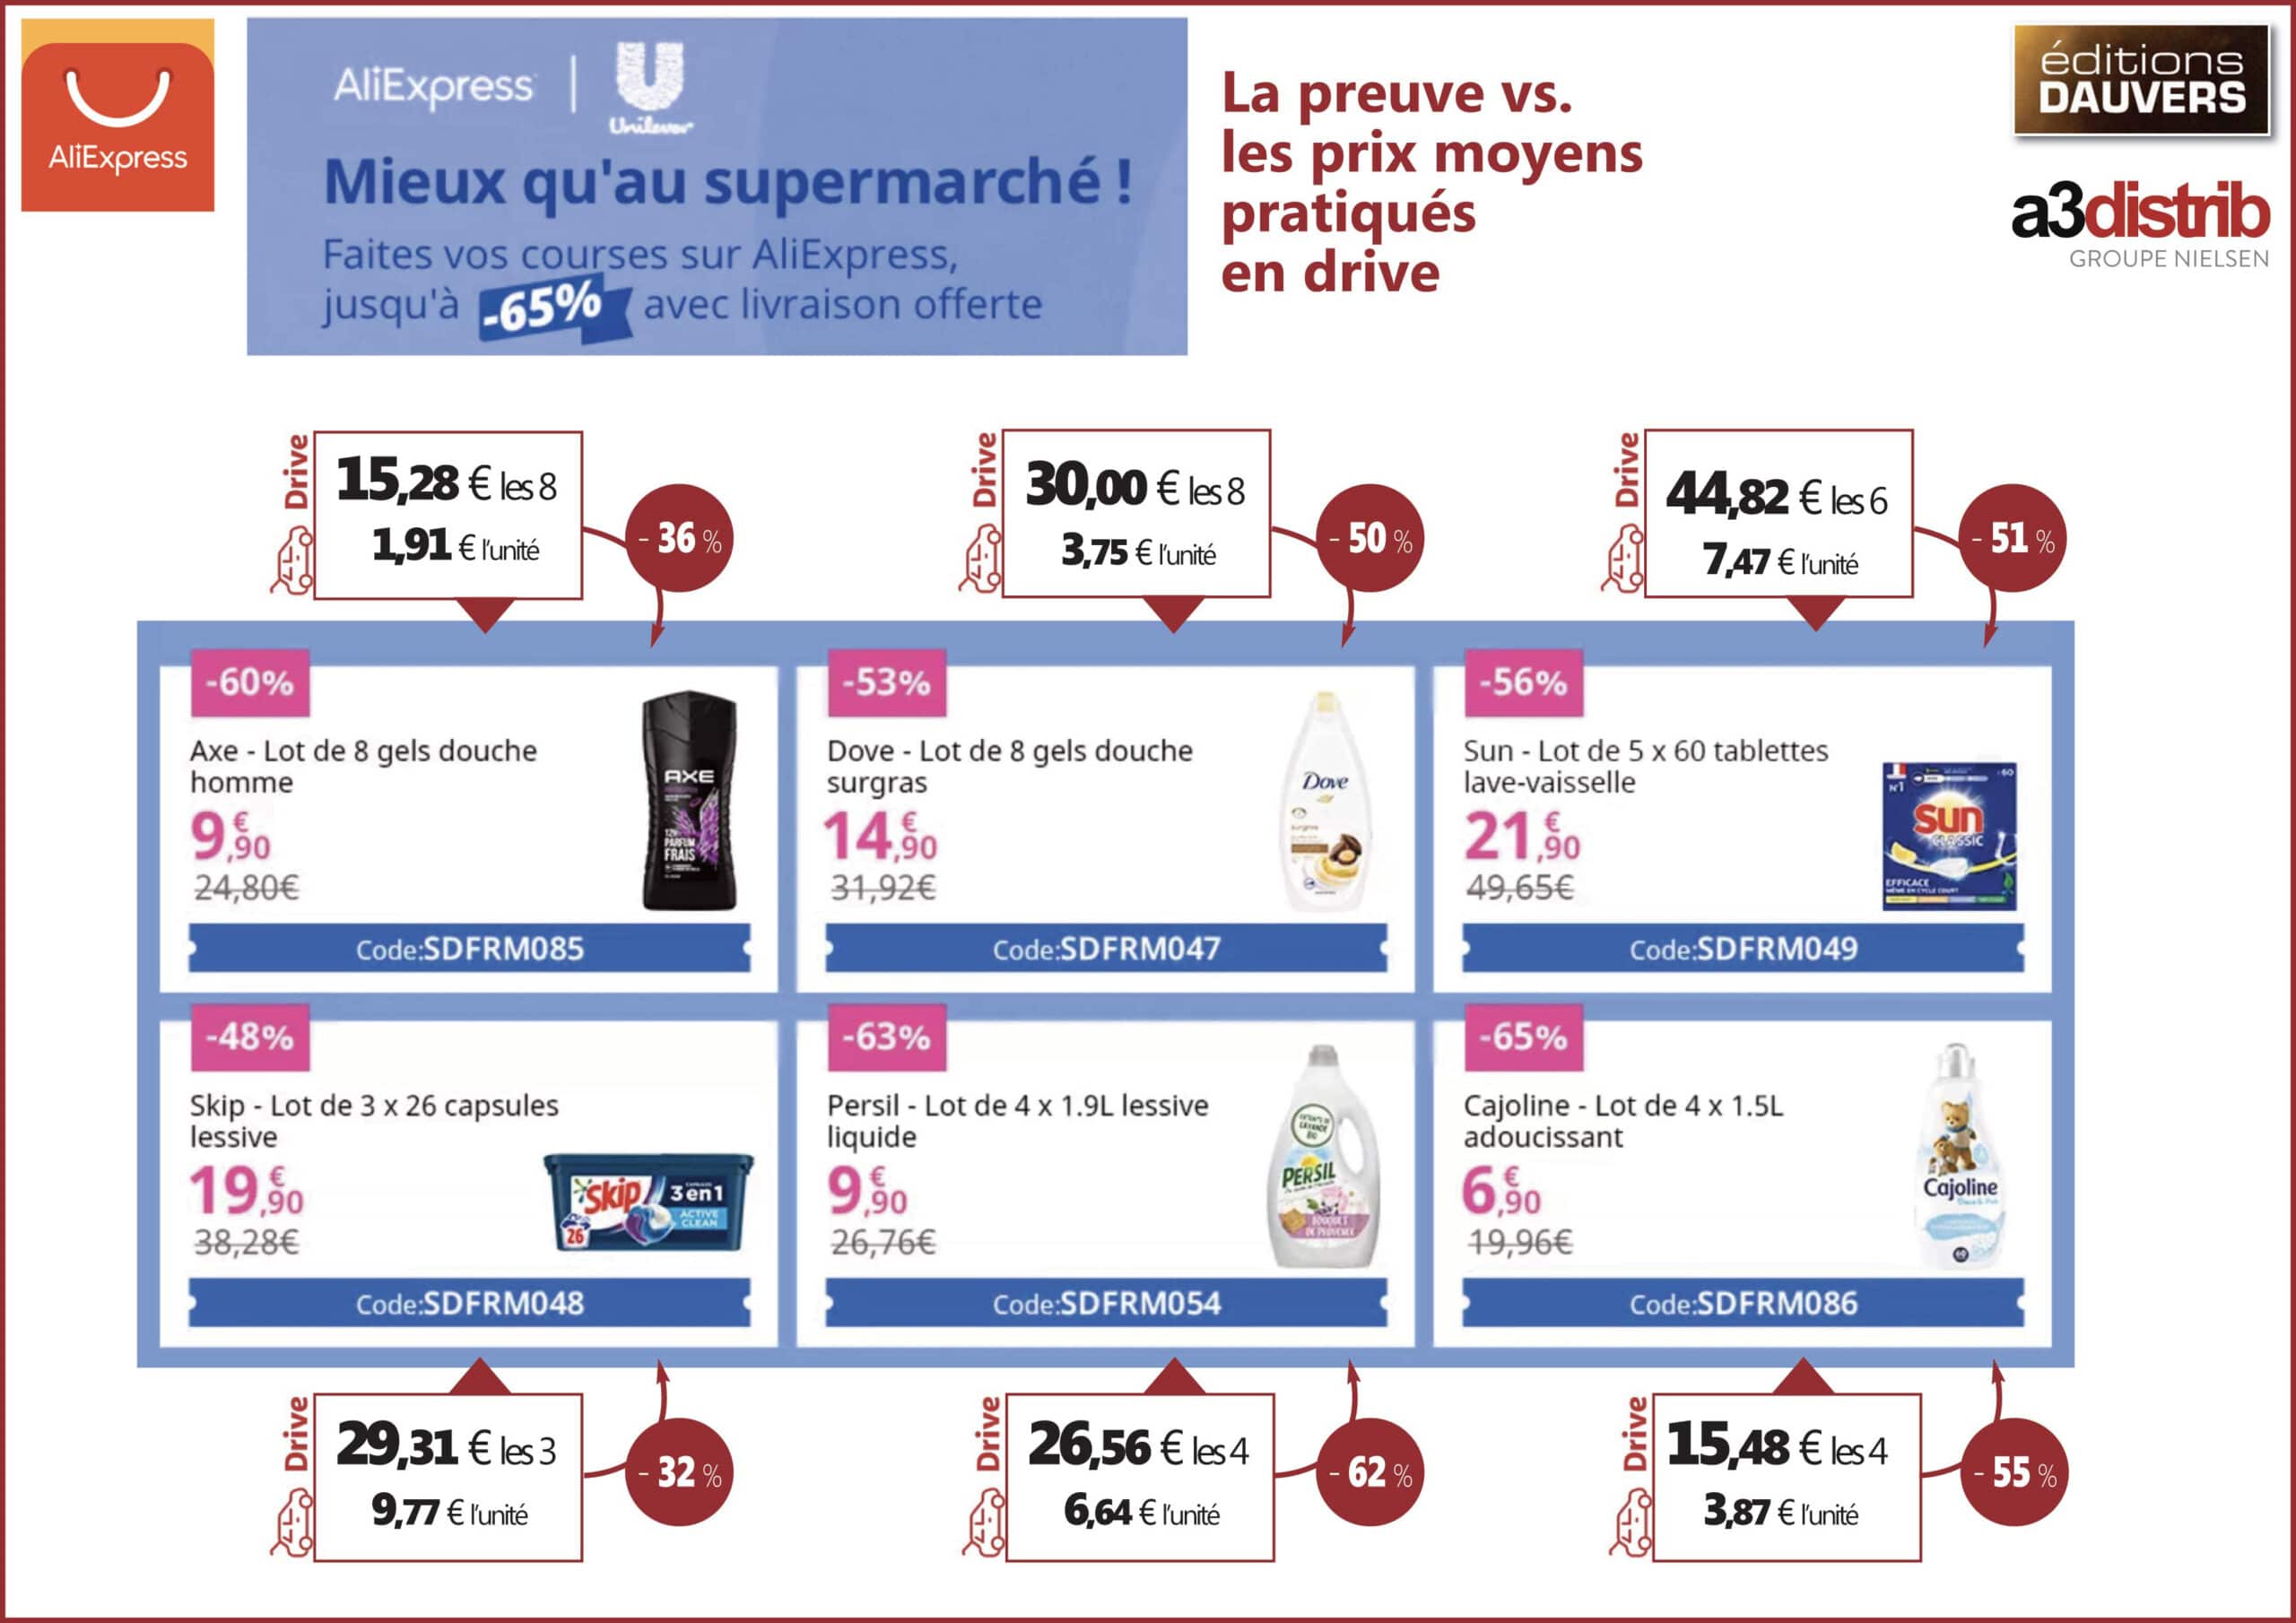 Promo Lessive Liquide Persil chez Carrefour